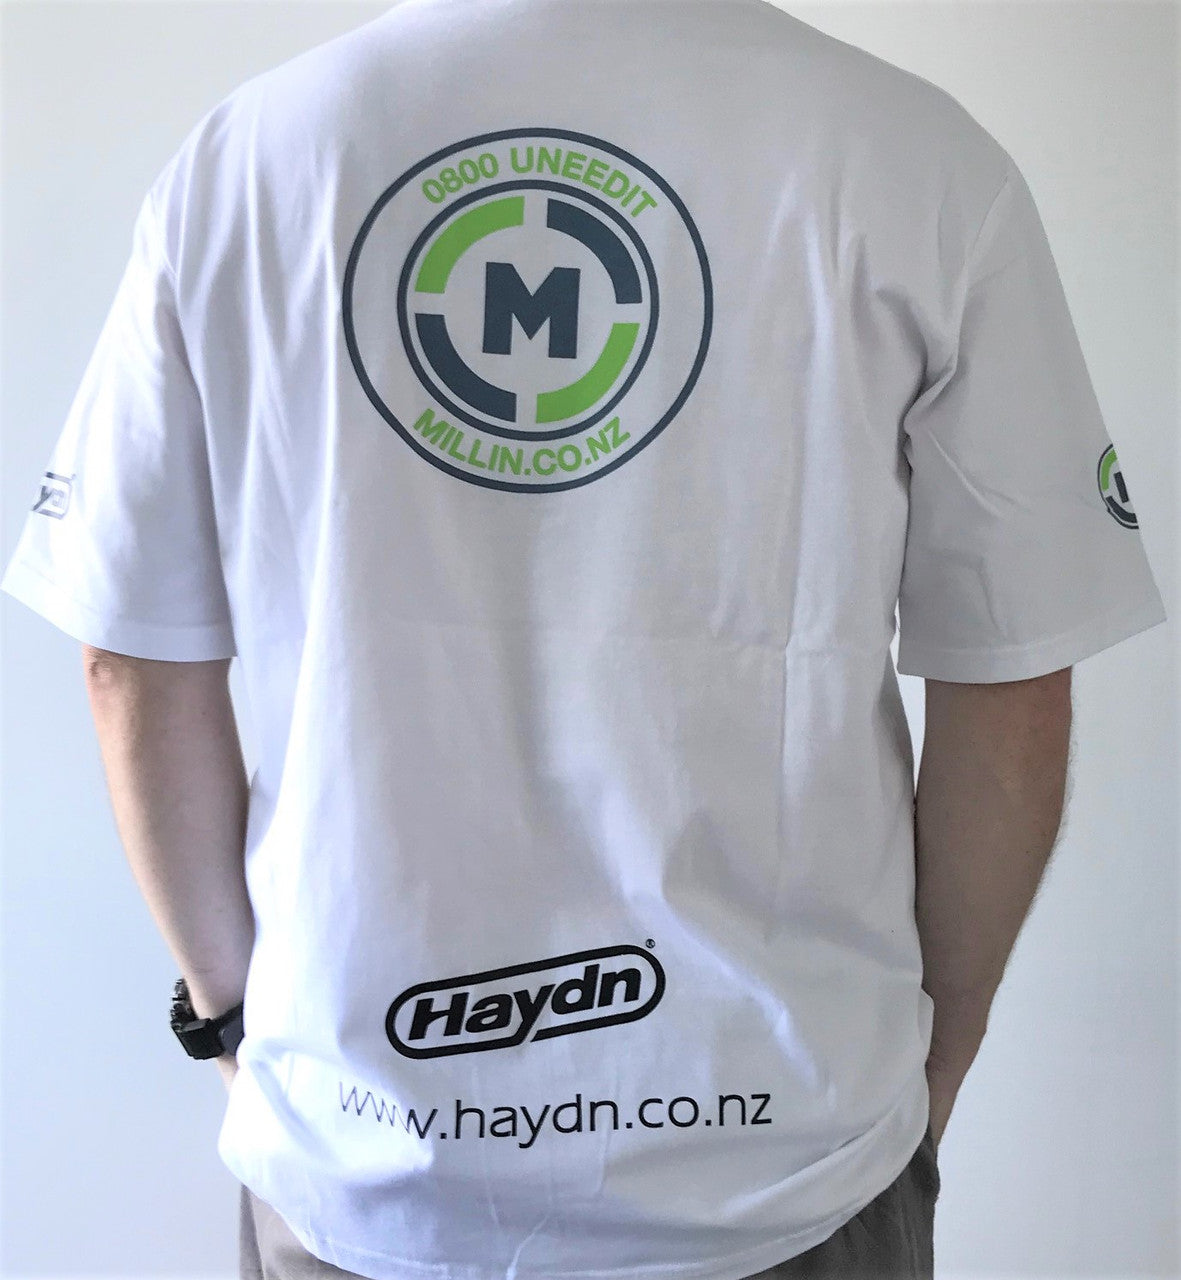 Millin / Haydn Kiwiana T-Shirts